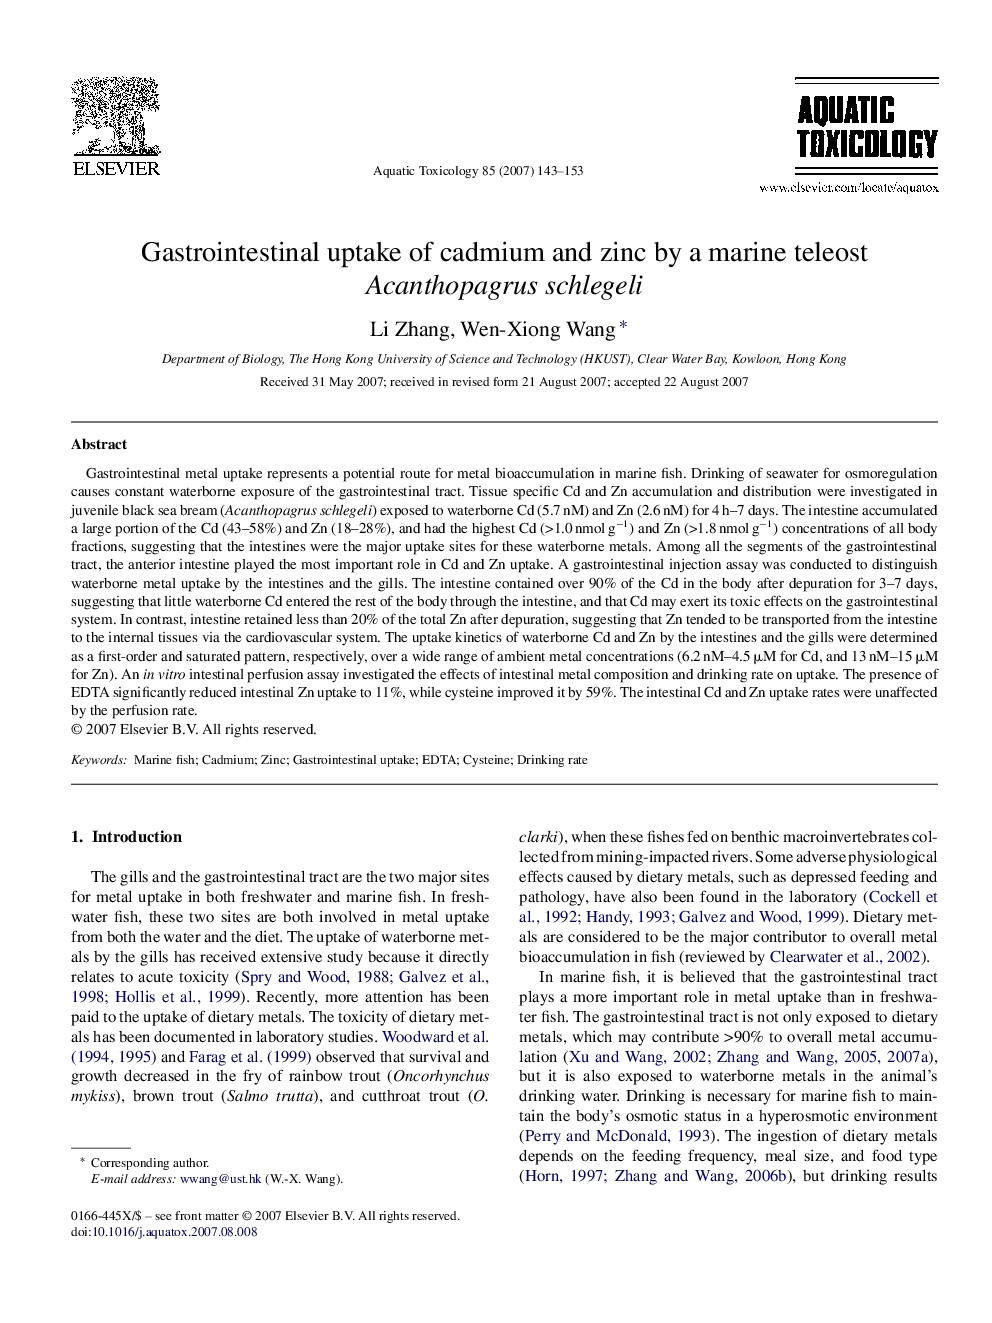 Gastrointestinal uptake of cadmium and zinc by a marine teleost Acanthopagrus schlegeli